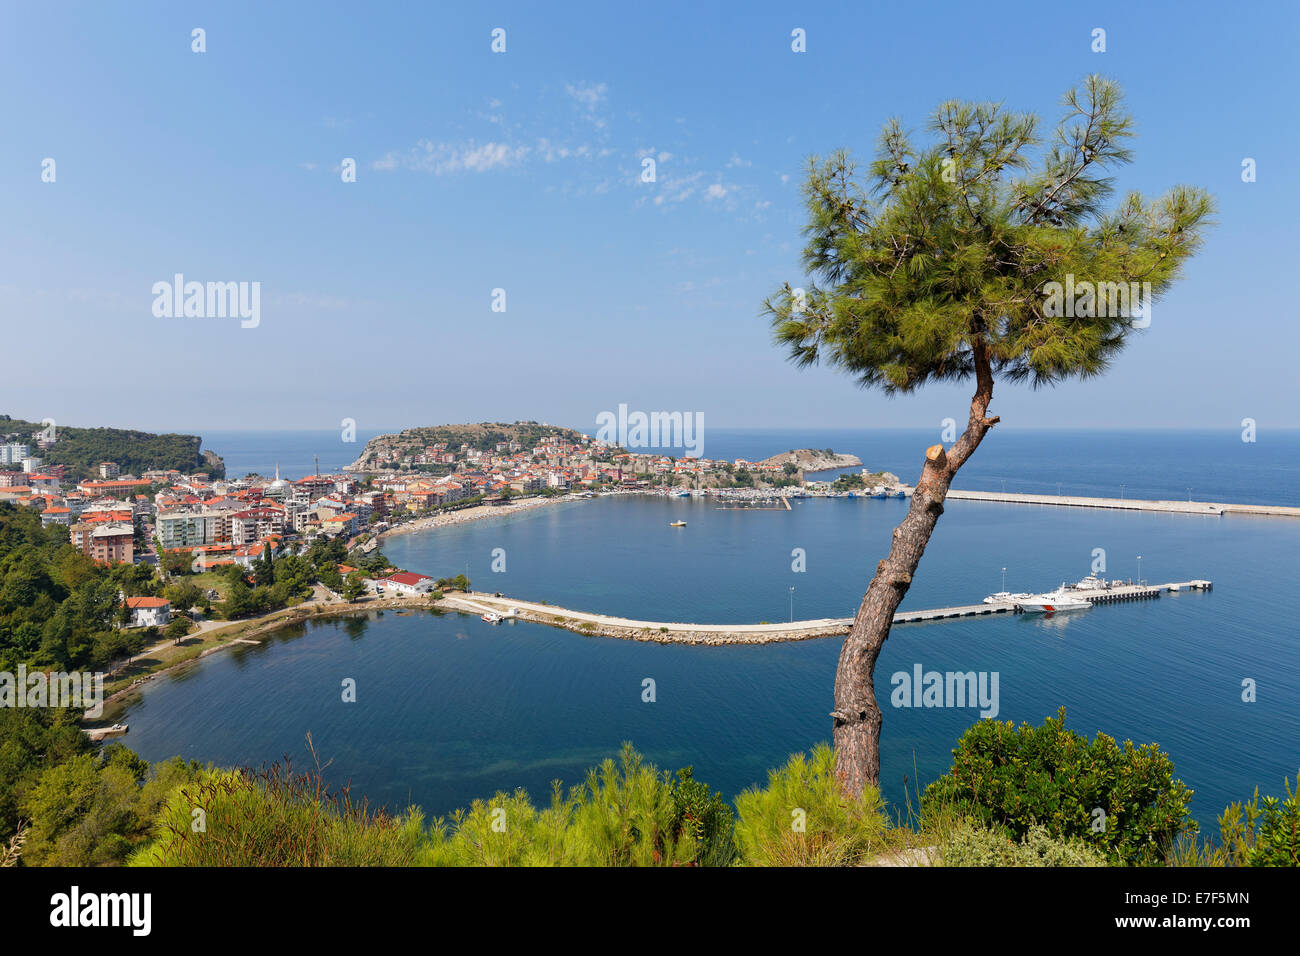 Harbour town of Amasra, Bartın Province, coast of the Black Sea, Black Sea Region, Turkey Stock Photo